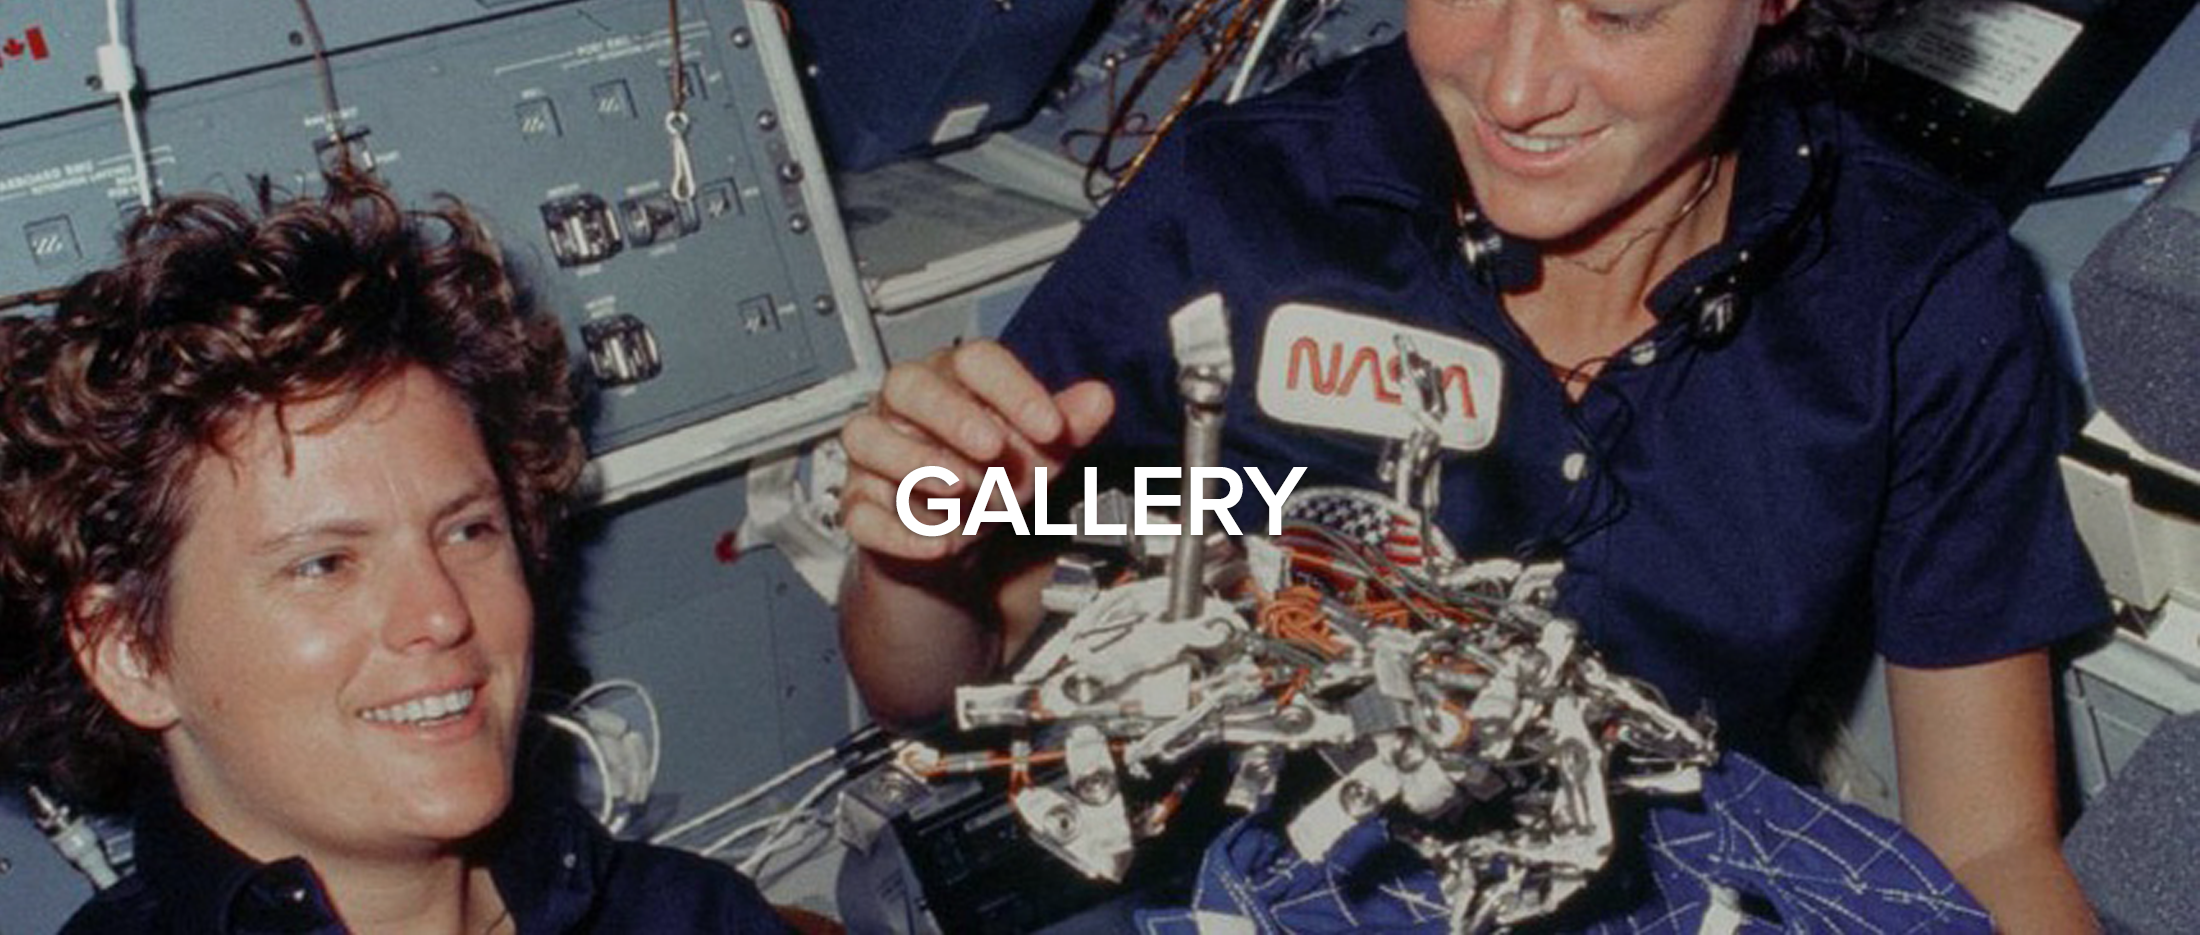 Kathy Sullivan in space suit